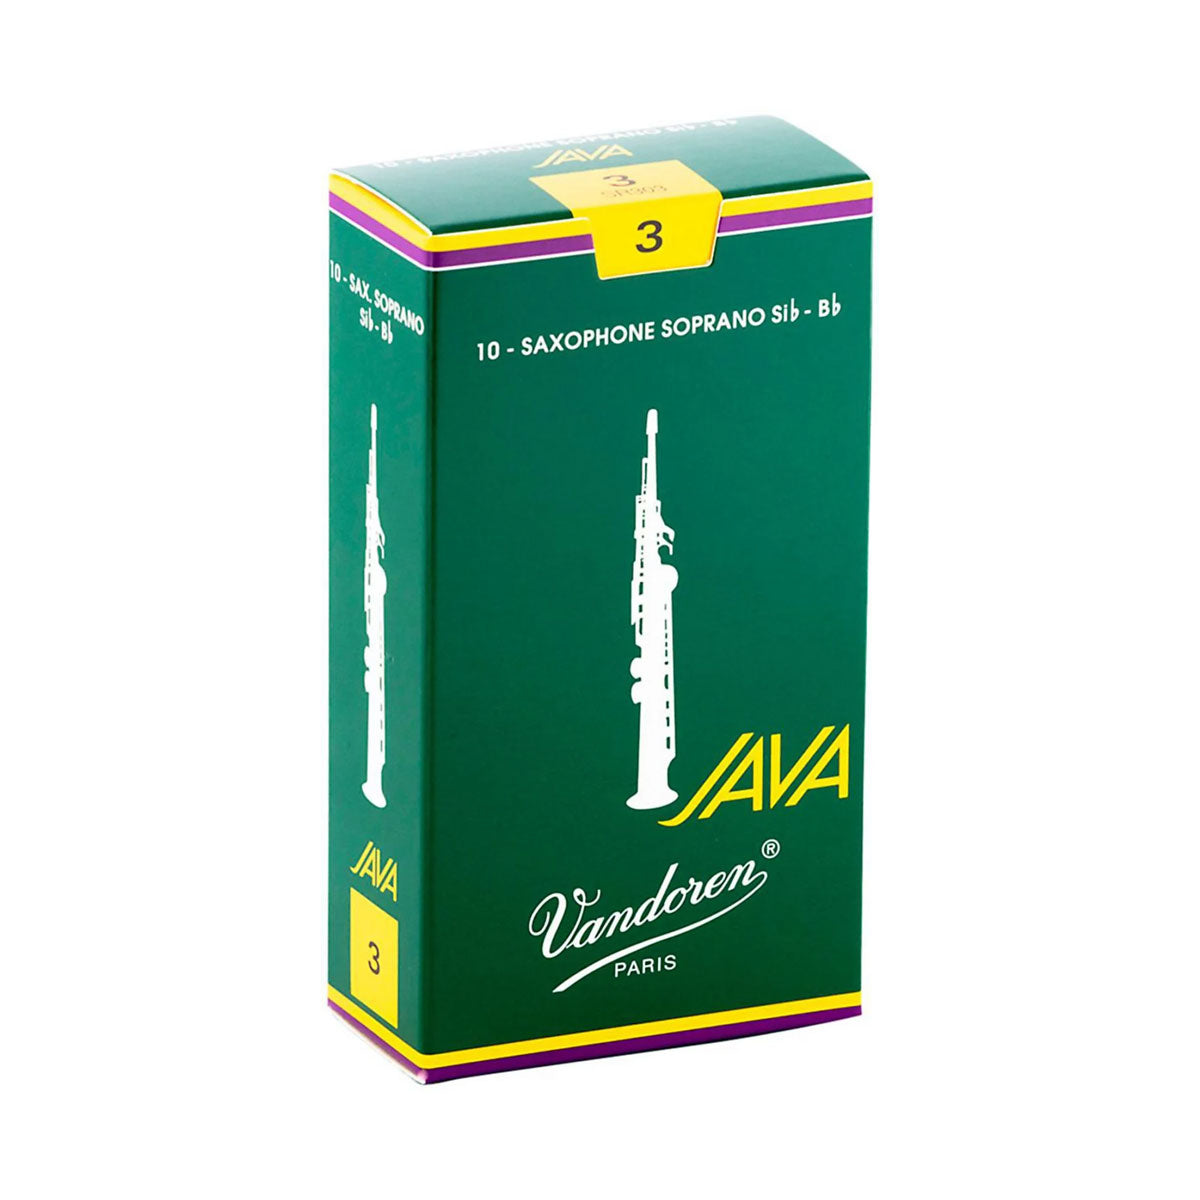 Vandoren Java Soprano Sax Reeds 3 - Per Box of 10